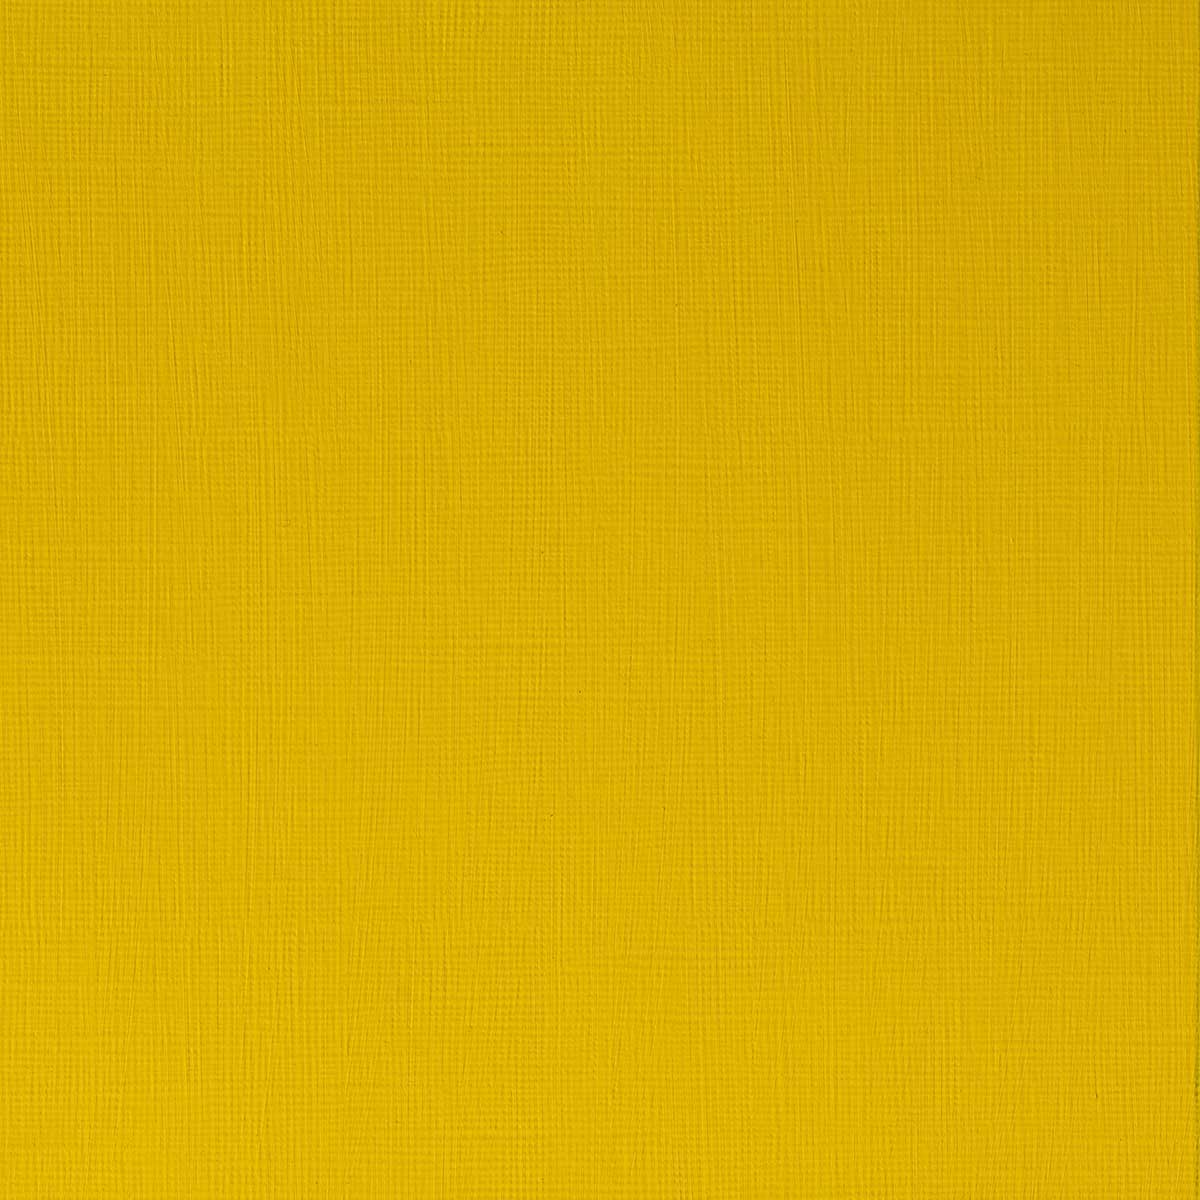 Winsor and Newton - Professional Artists' Acrylic Colour - 60ml - Azo Yellow Medium